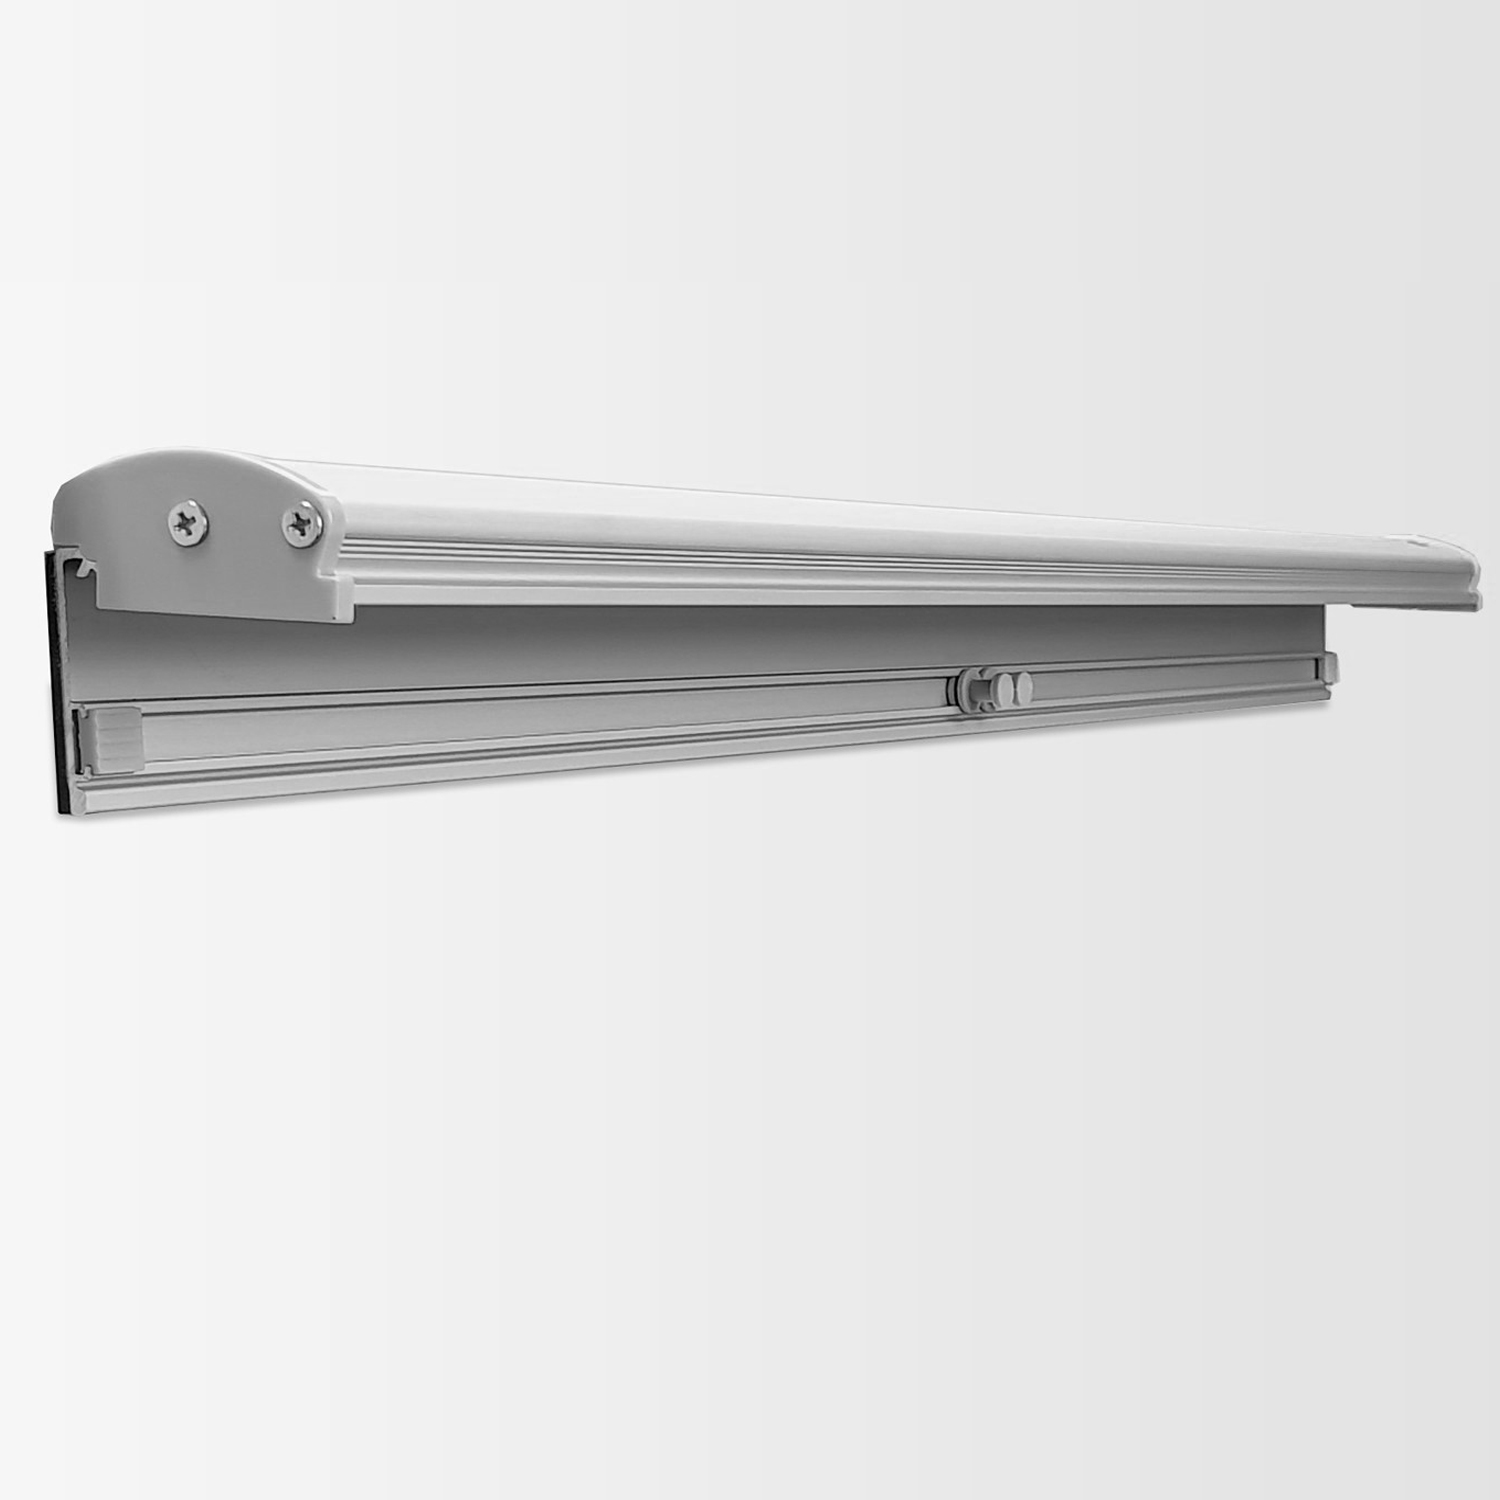 WriteOn® Magnetic Flip Pad Holder